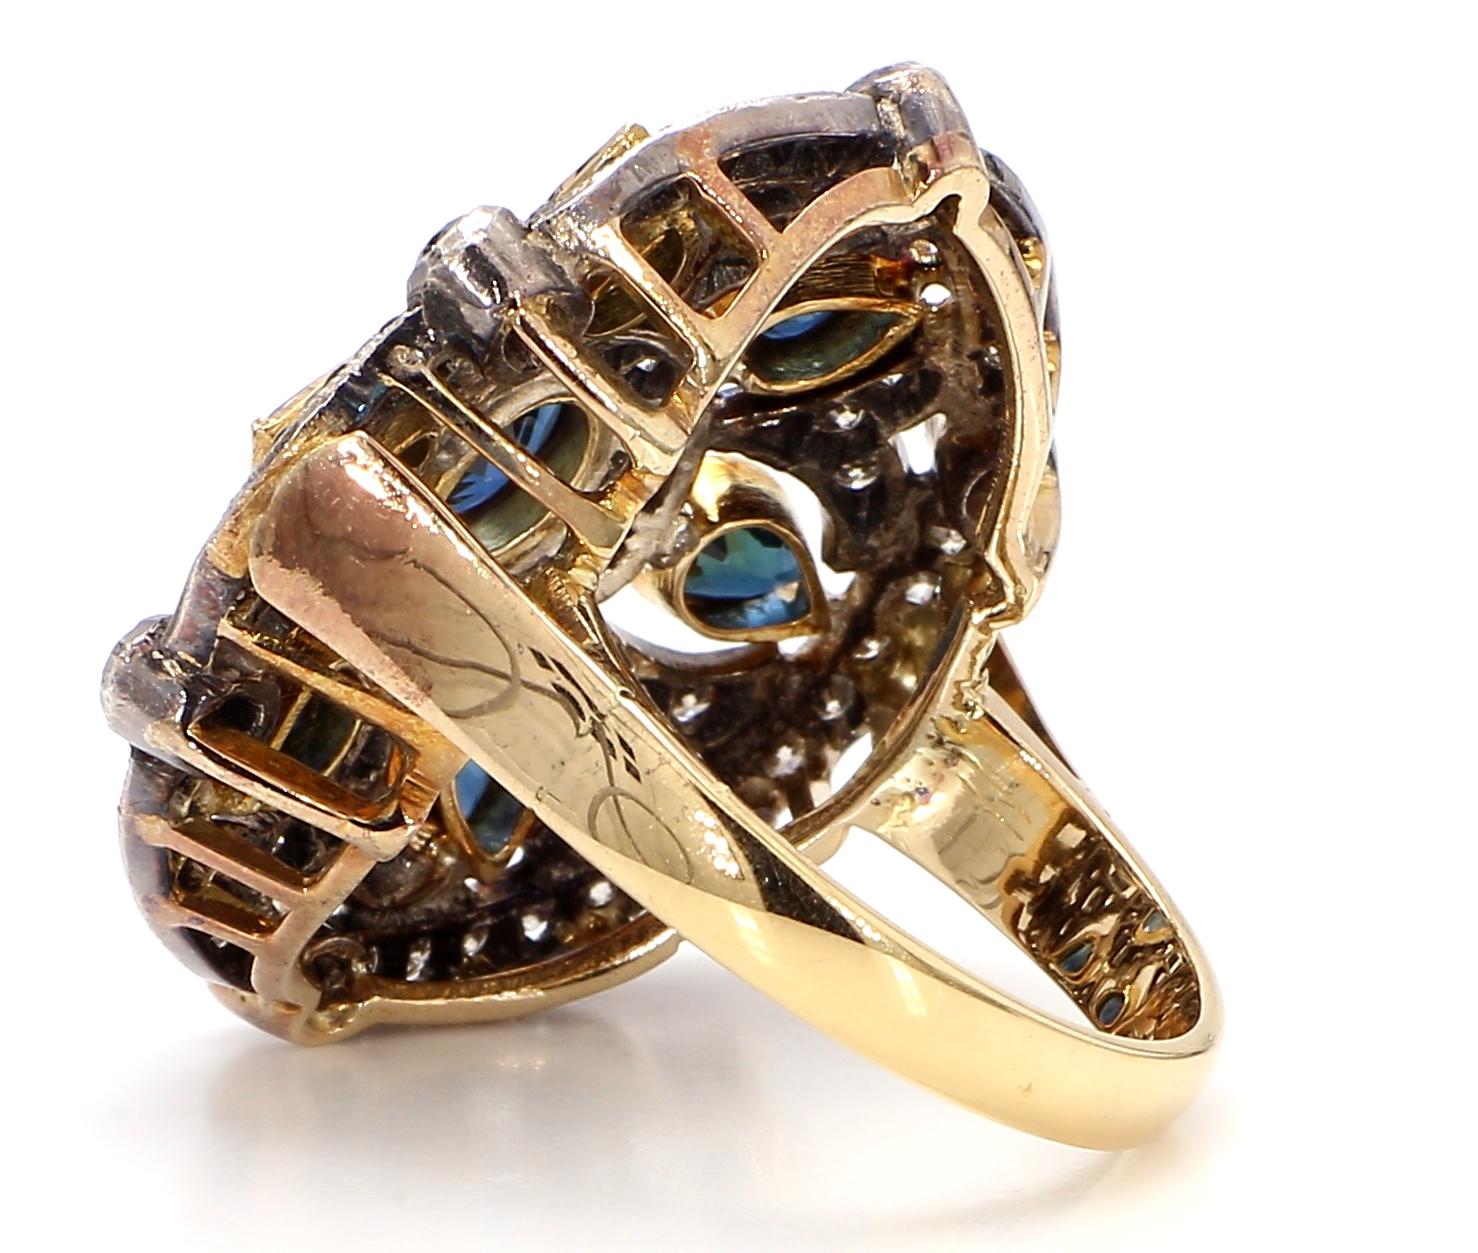 Antique Rount Blue Sapphire Ring